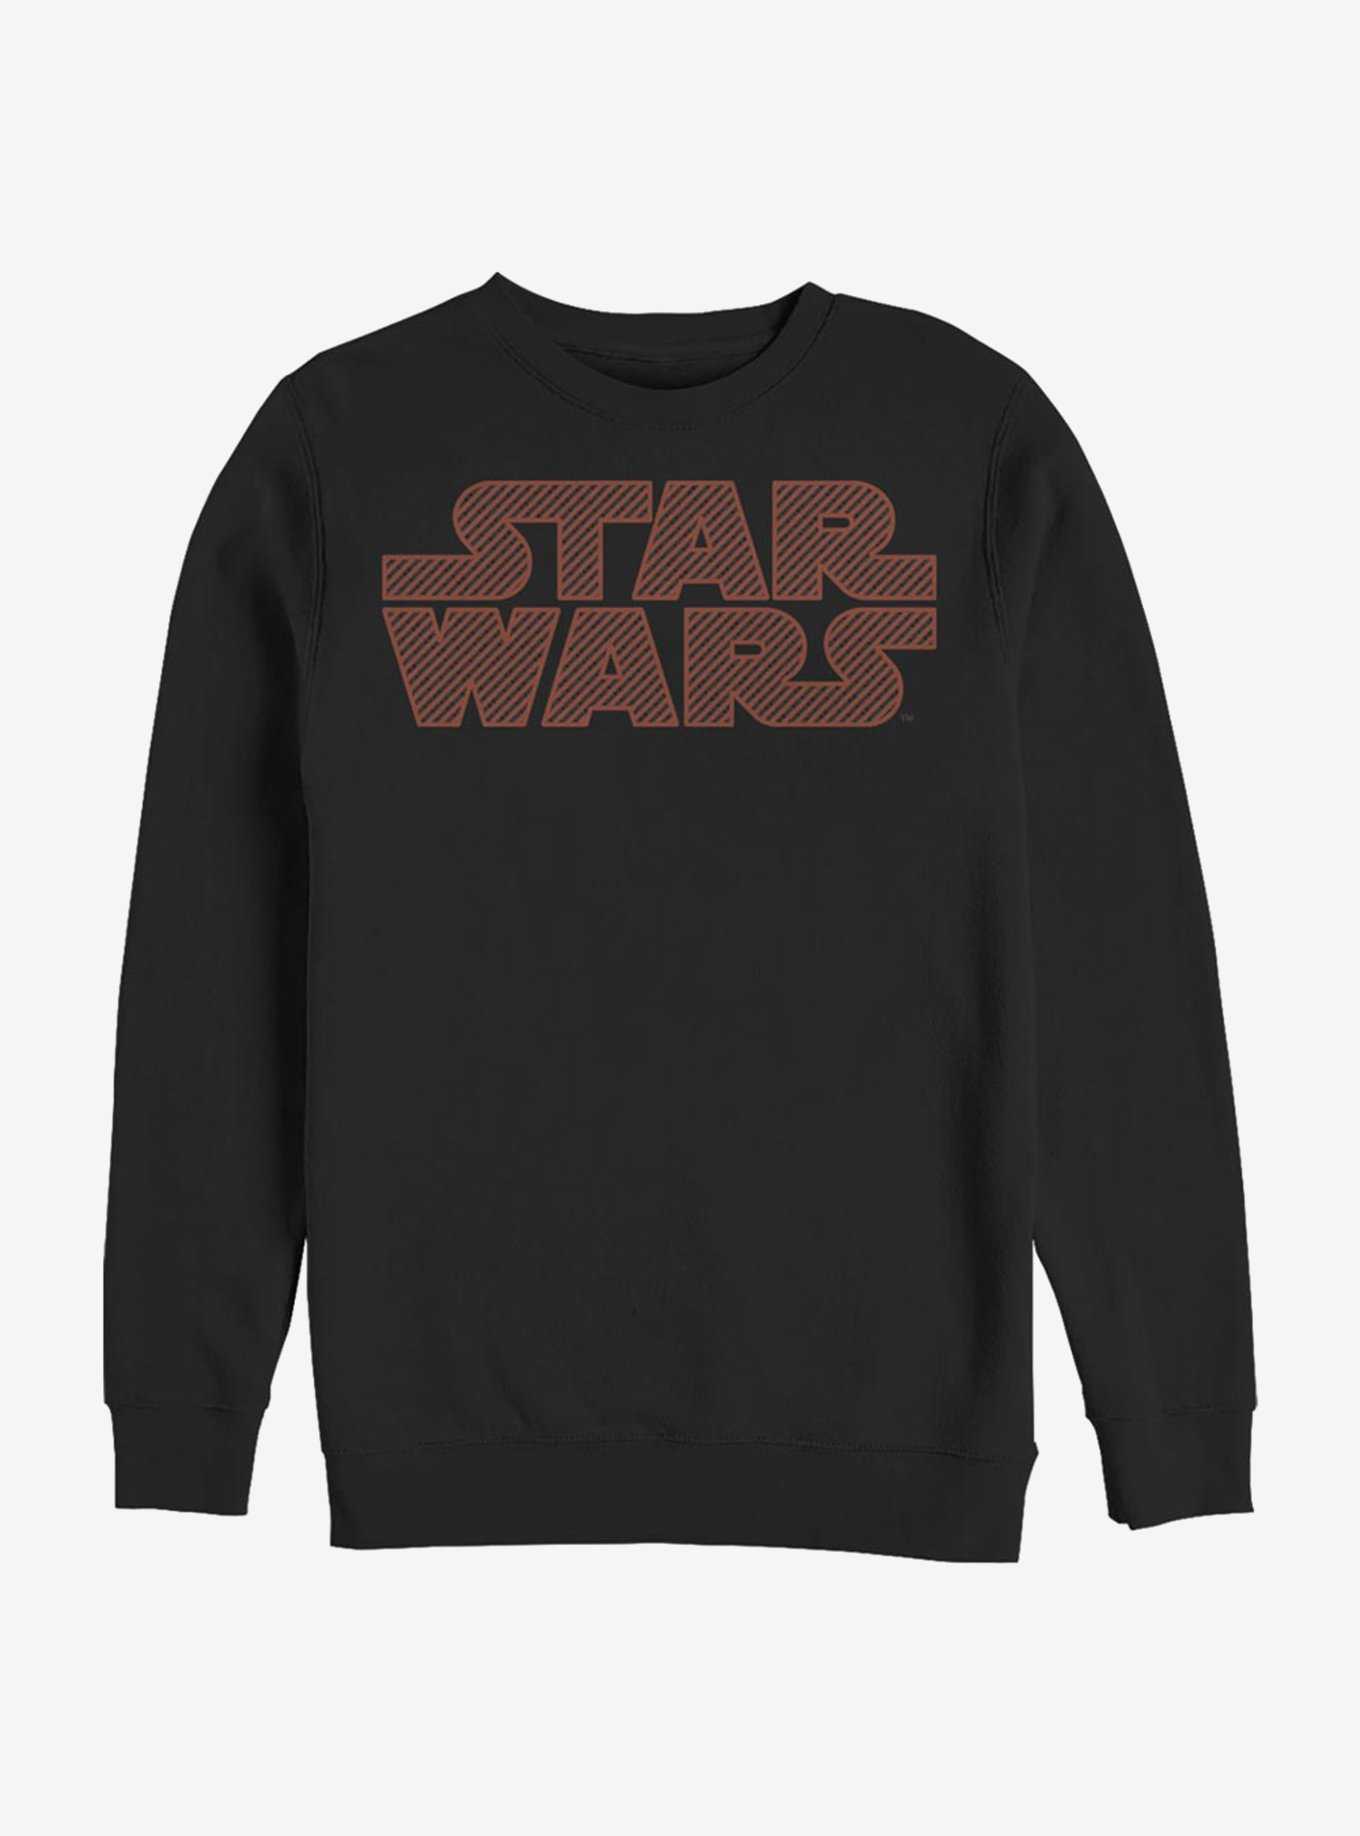 Star Wars Striped Logo Sweatshirt, , hi-res